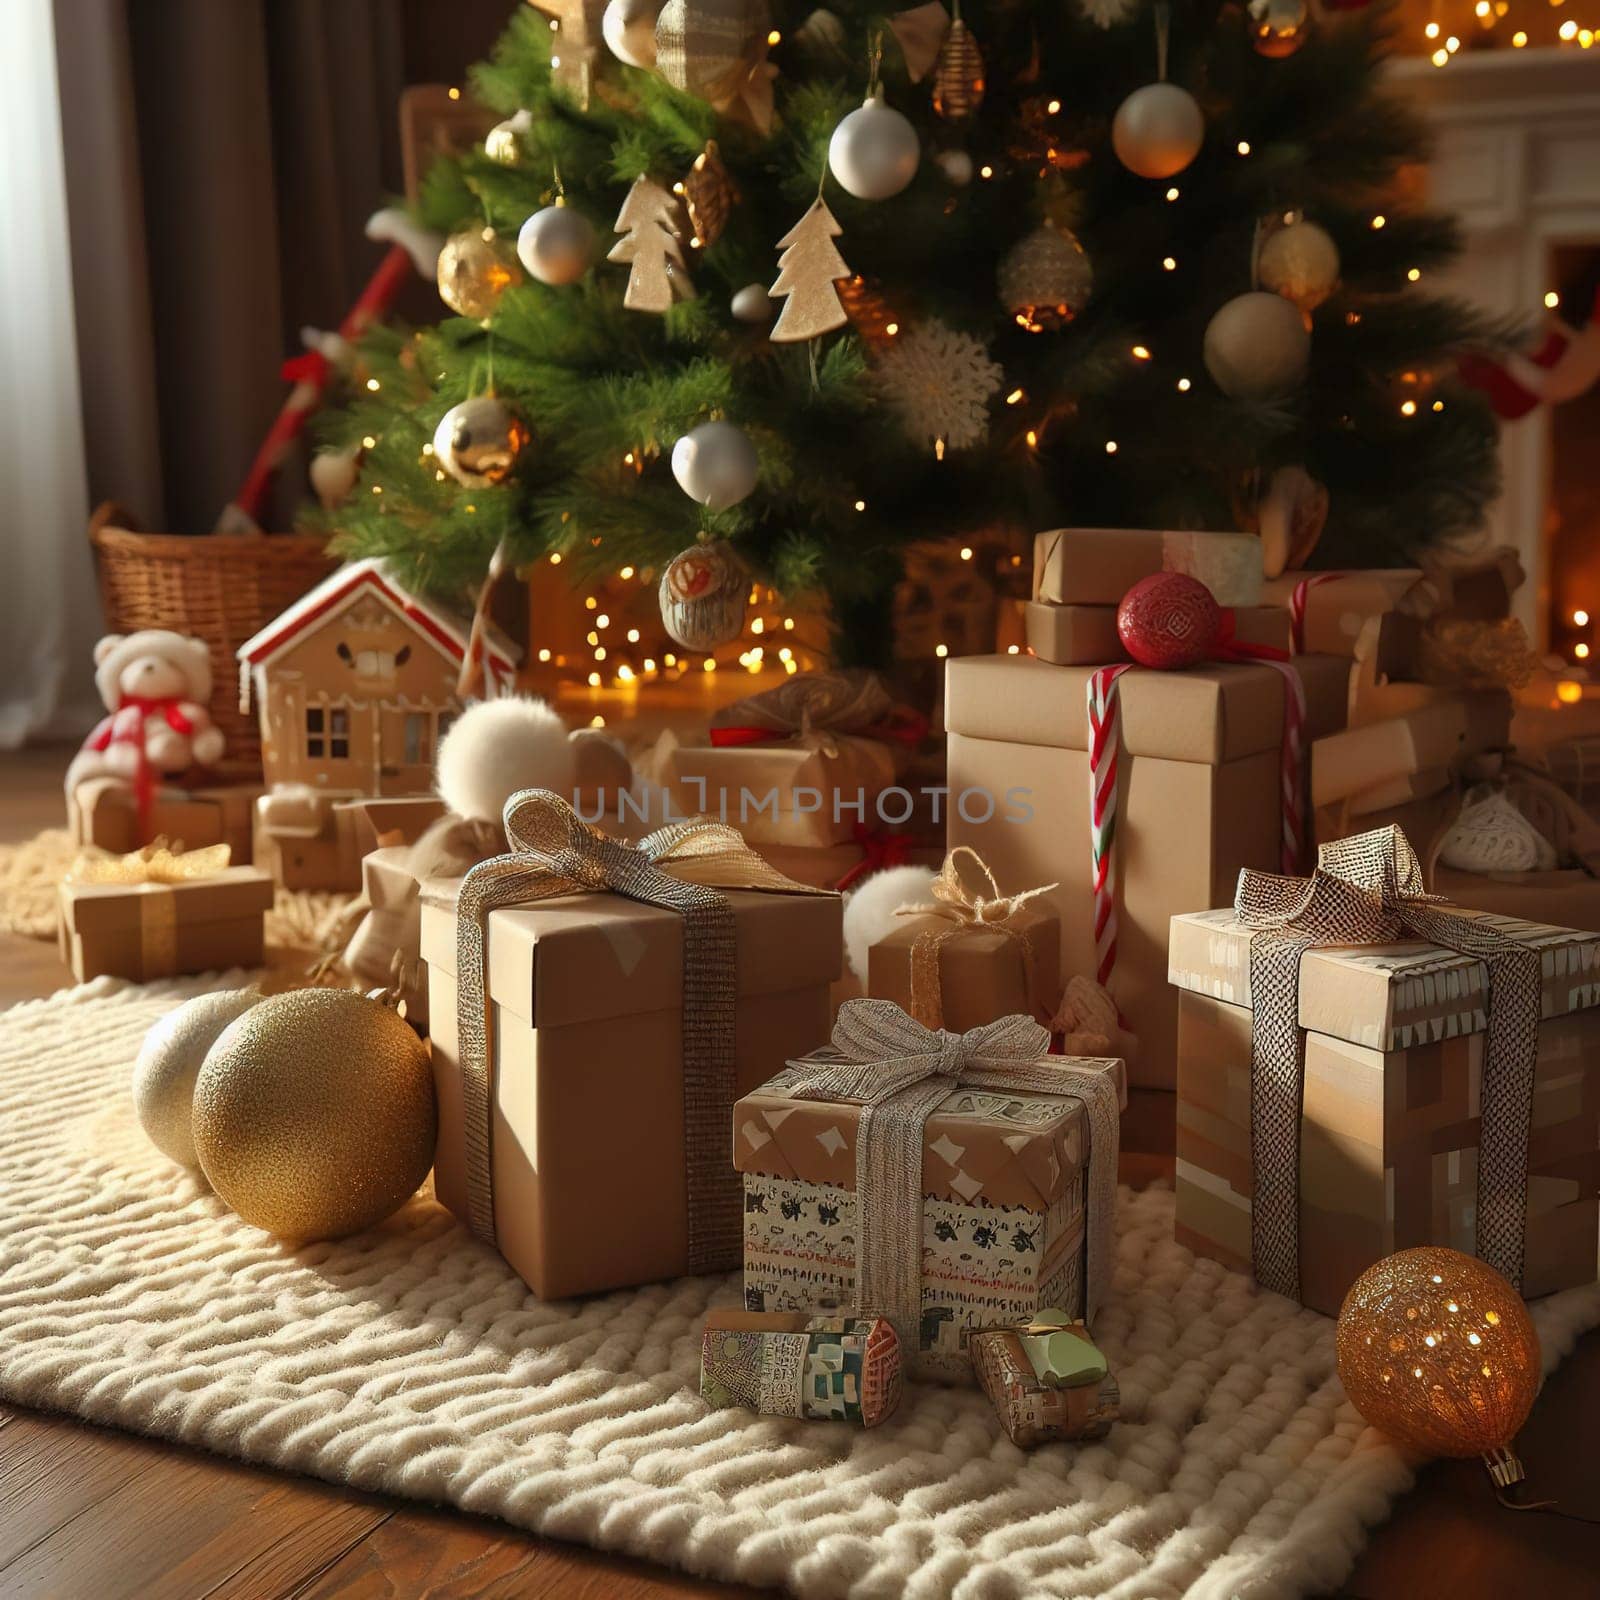 Beautiful luxurious Christmas gifts on floor in room with Christmas tree by EkaterinaPereslavtseva